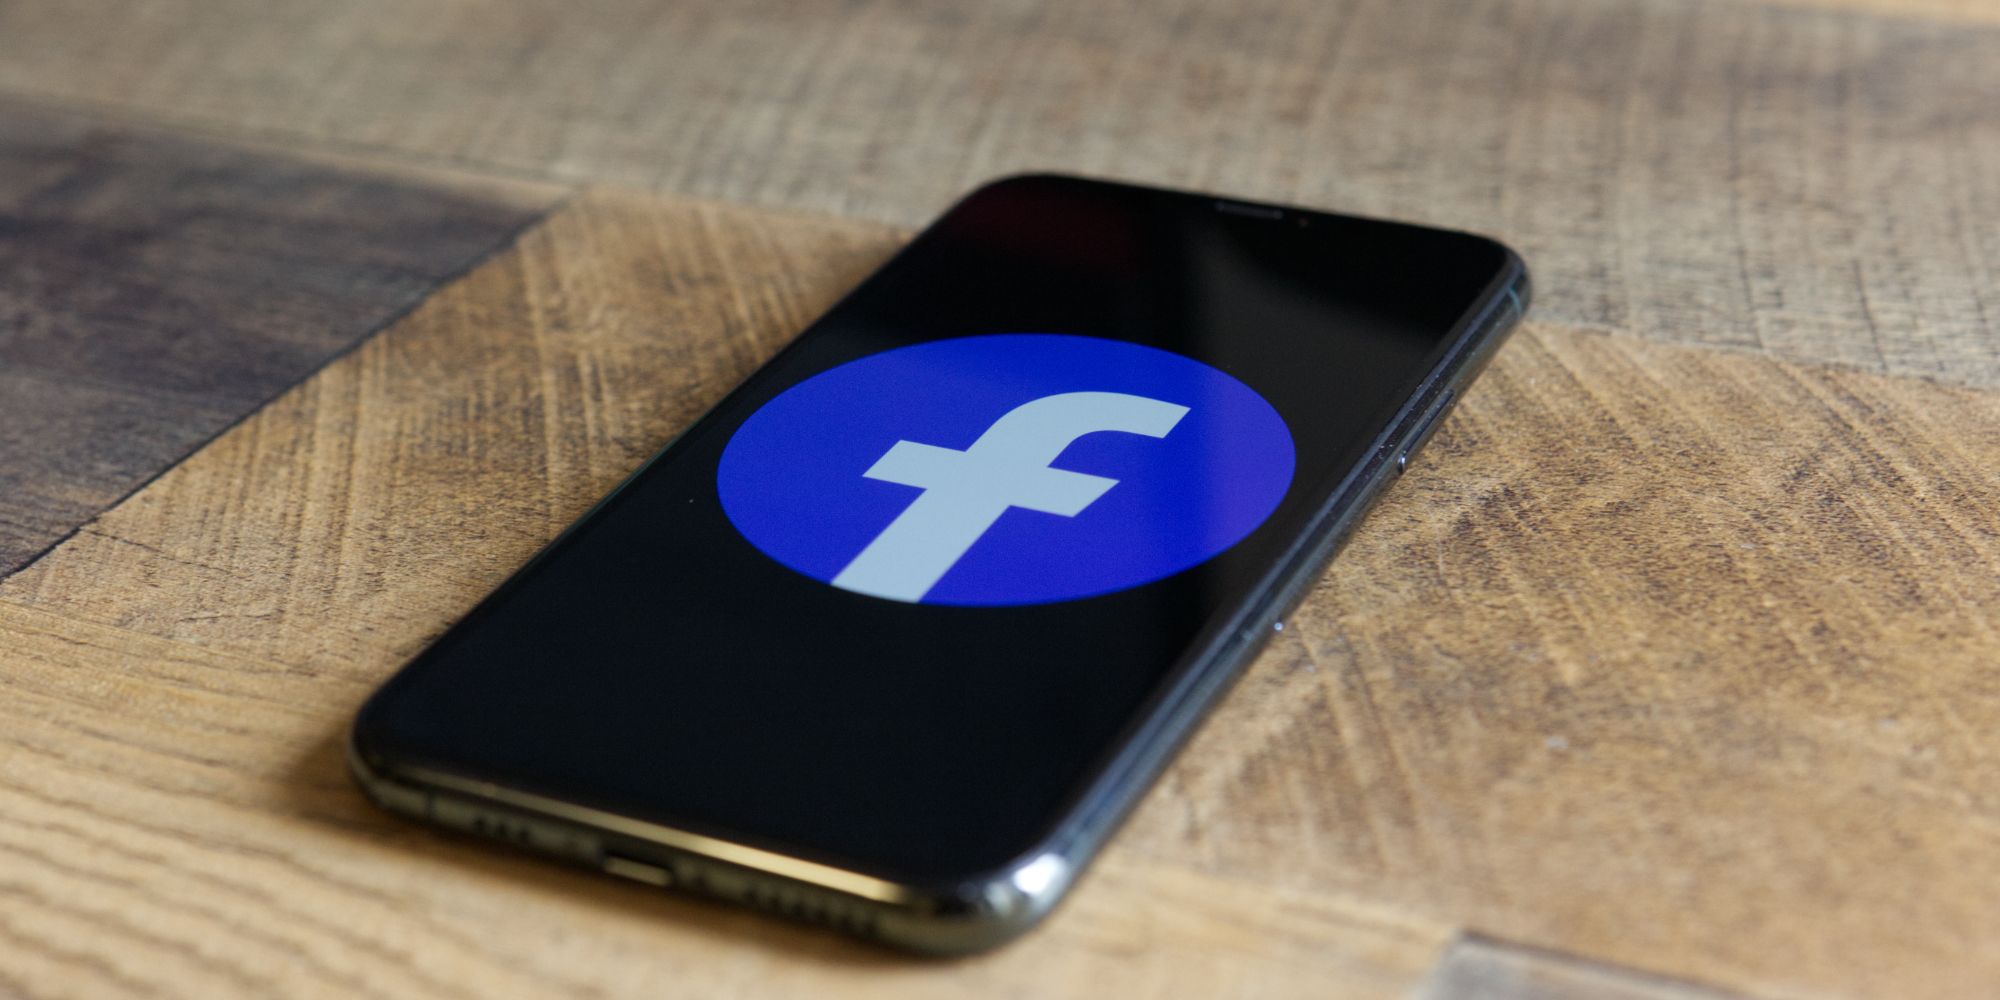 Facebook logo on an iPhone